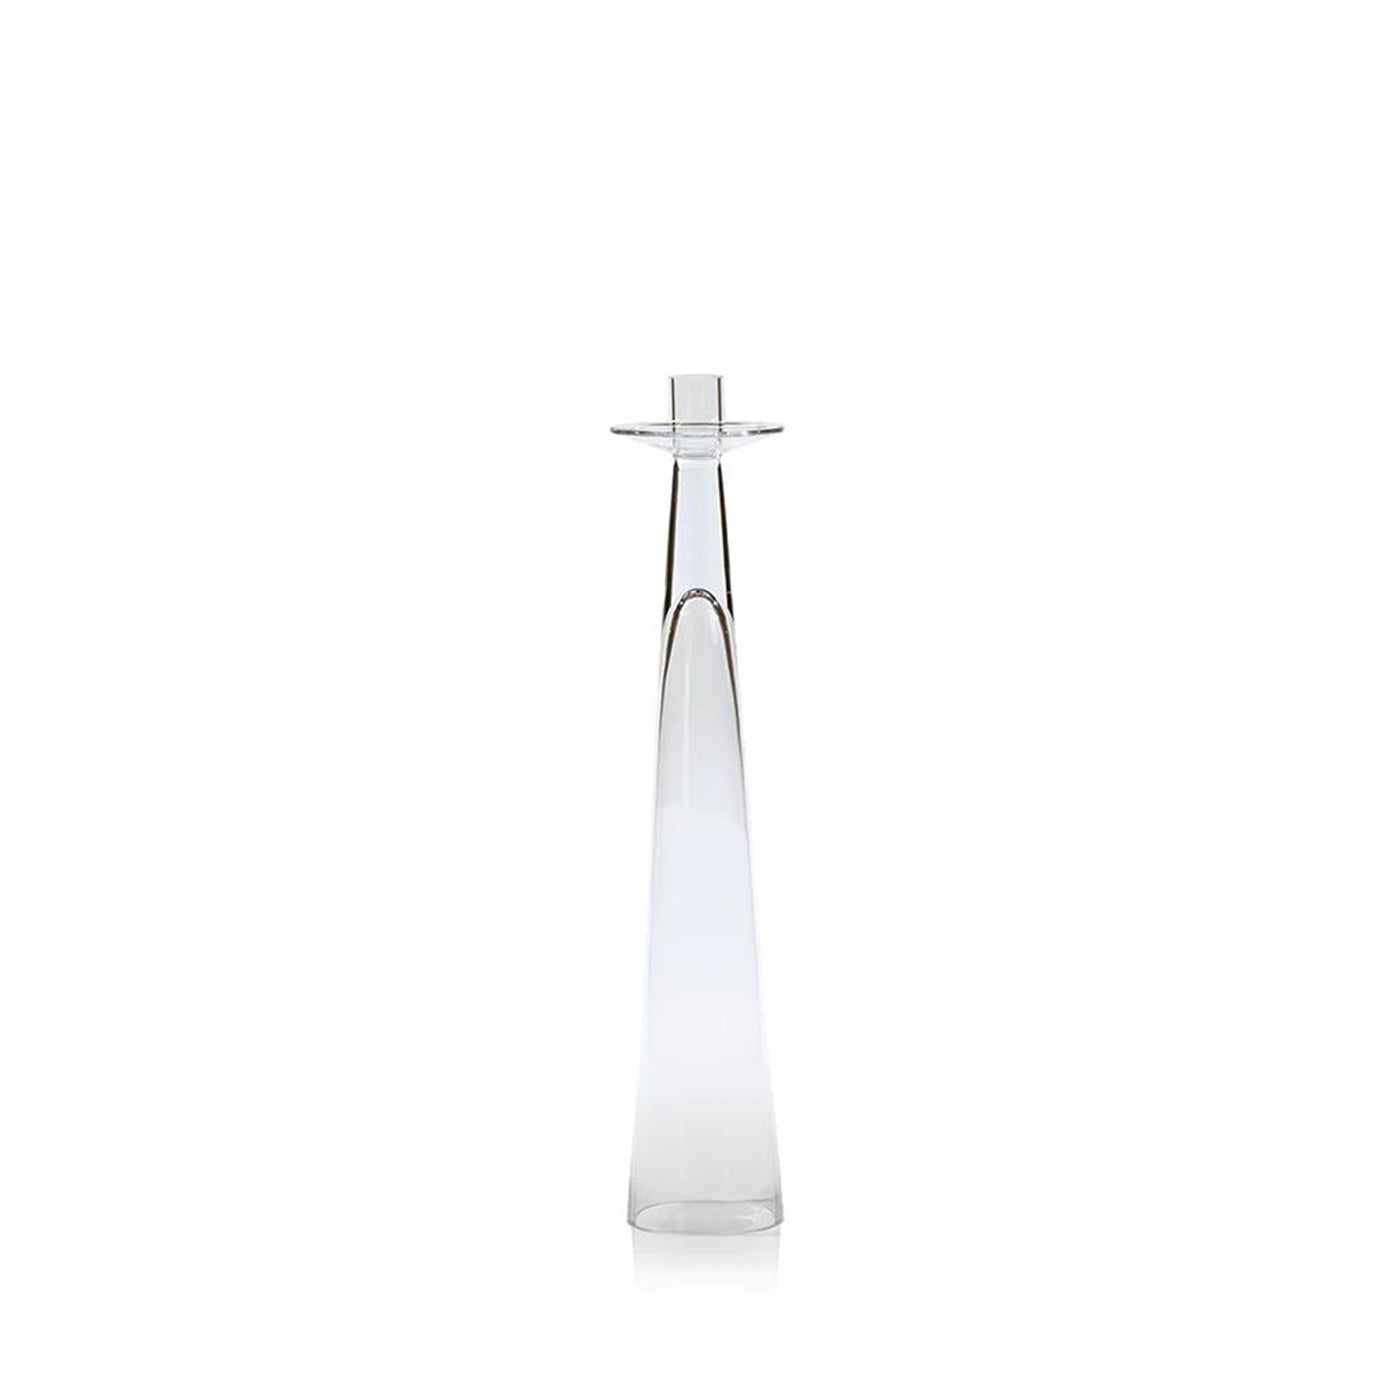 Amin Glass Candleholder - Medium - 15.75"  Cannot ship